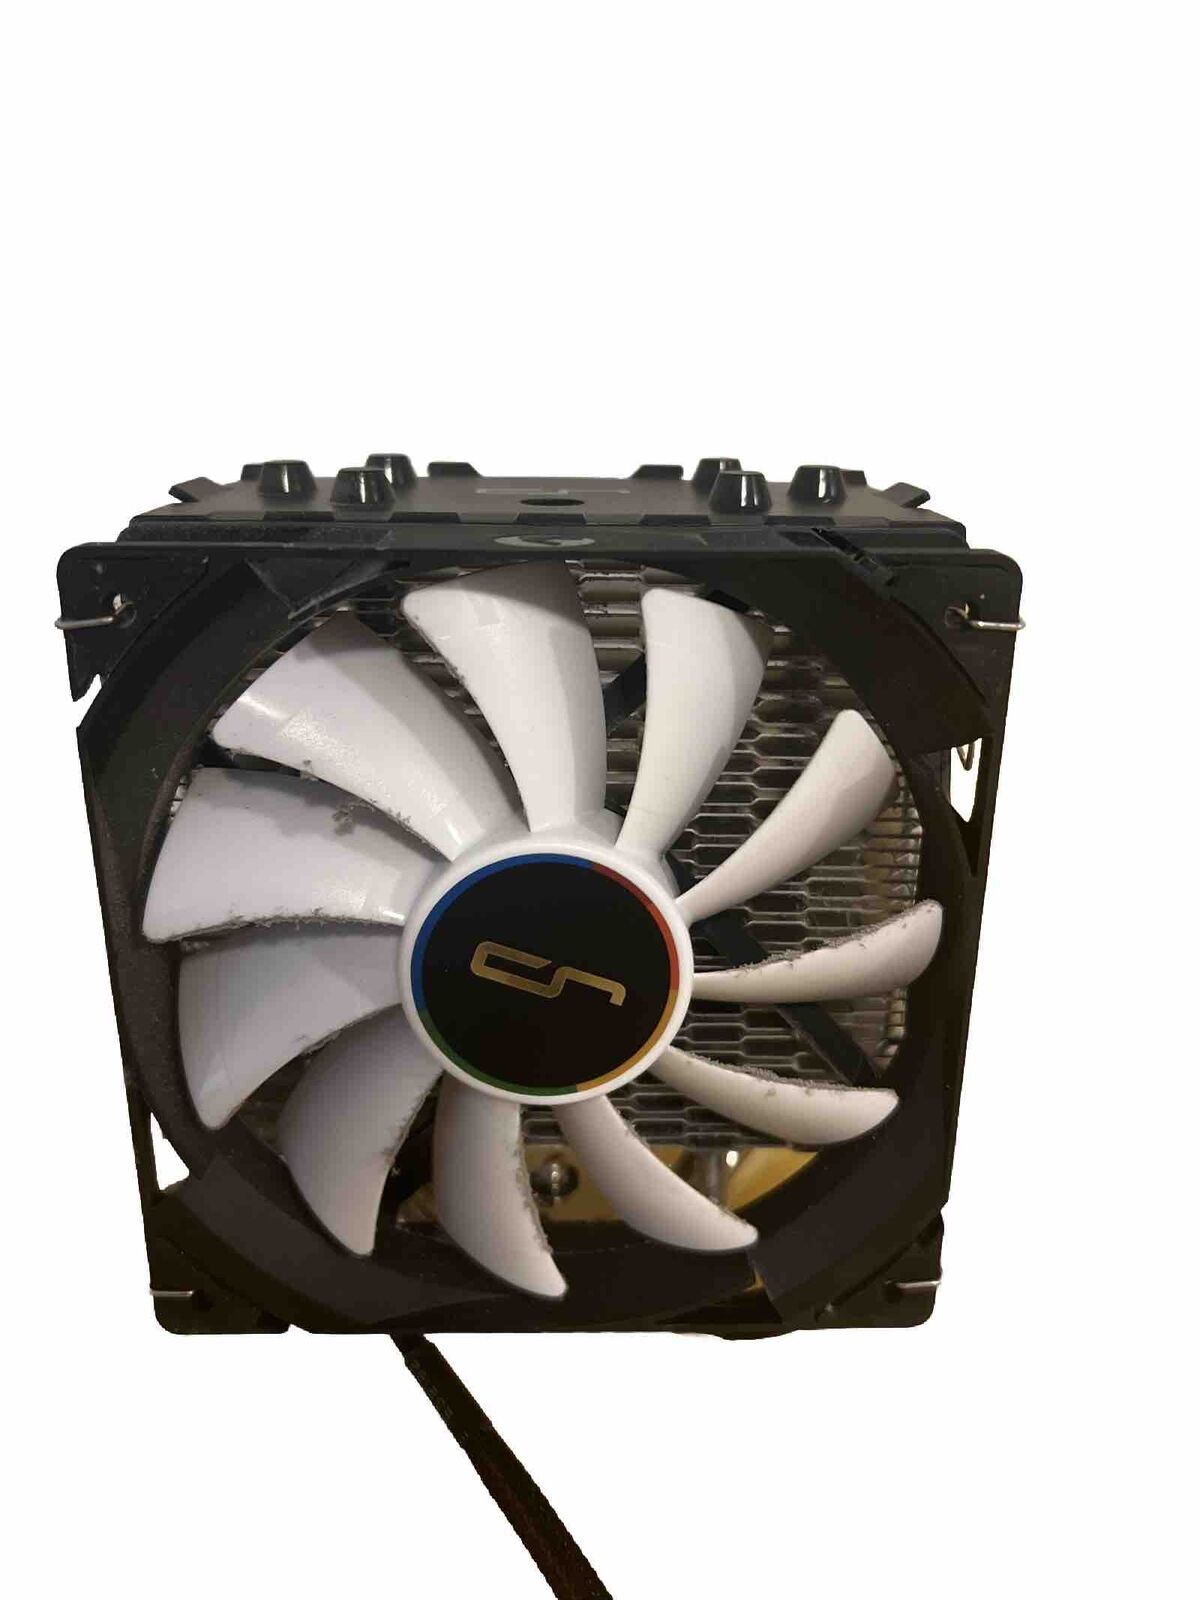 CRYORIG H7 49 CFM CPU Cooler - High Performance, Extra Pins, Good Condition